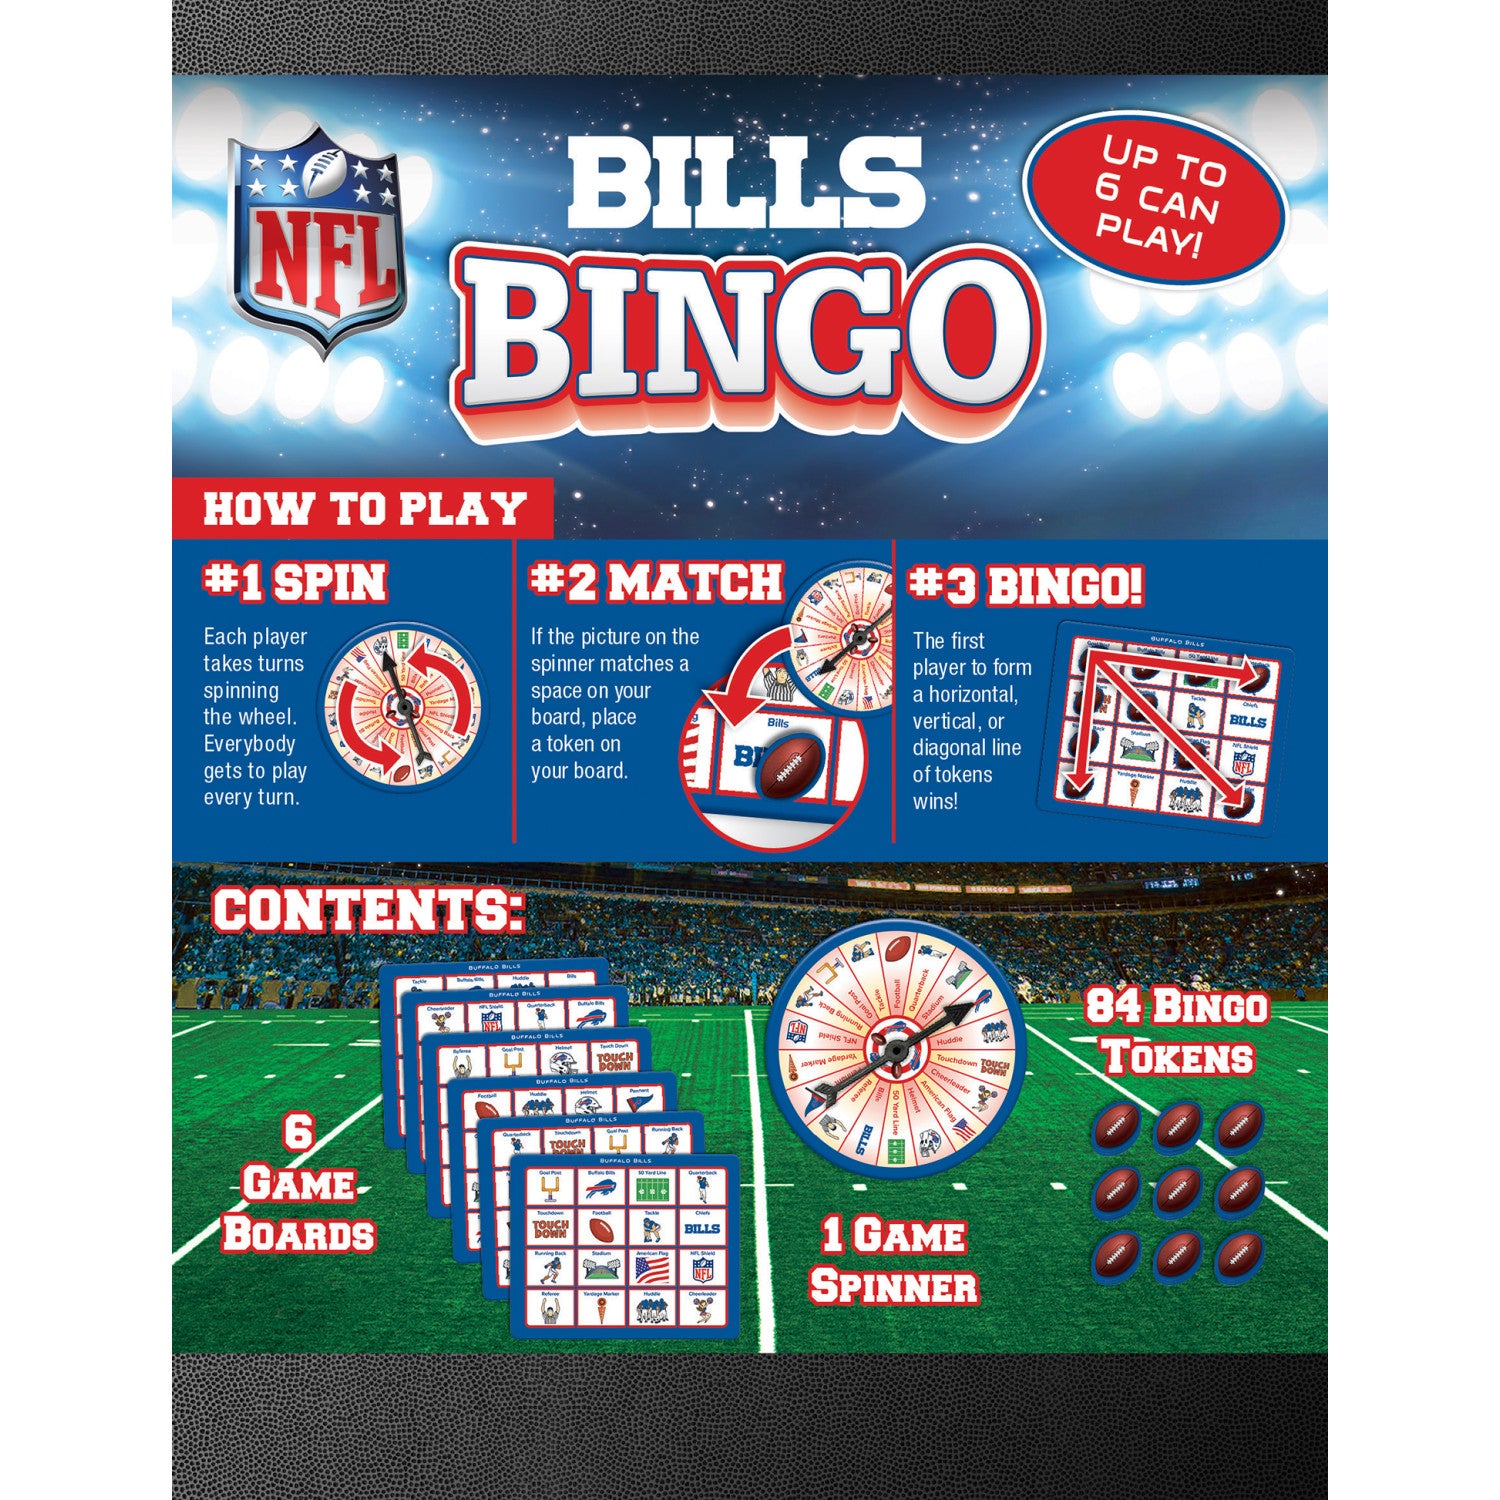 Buffalo Bills Bingo Game